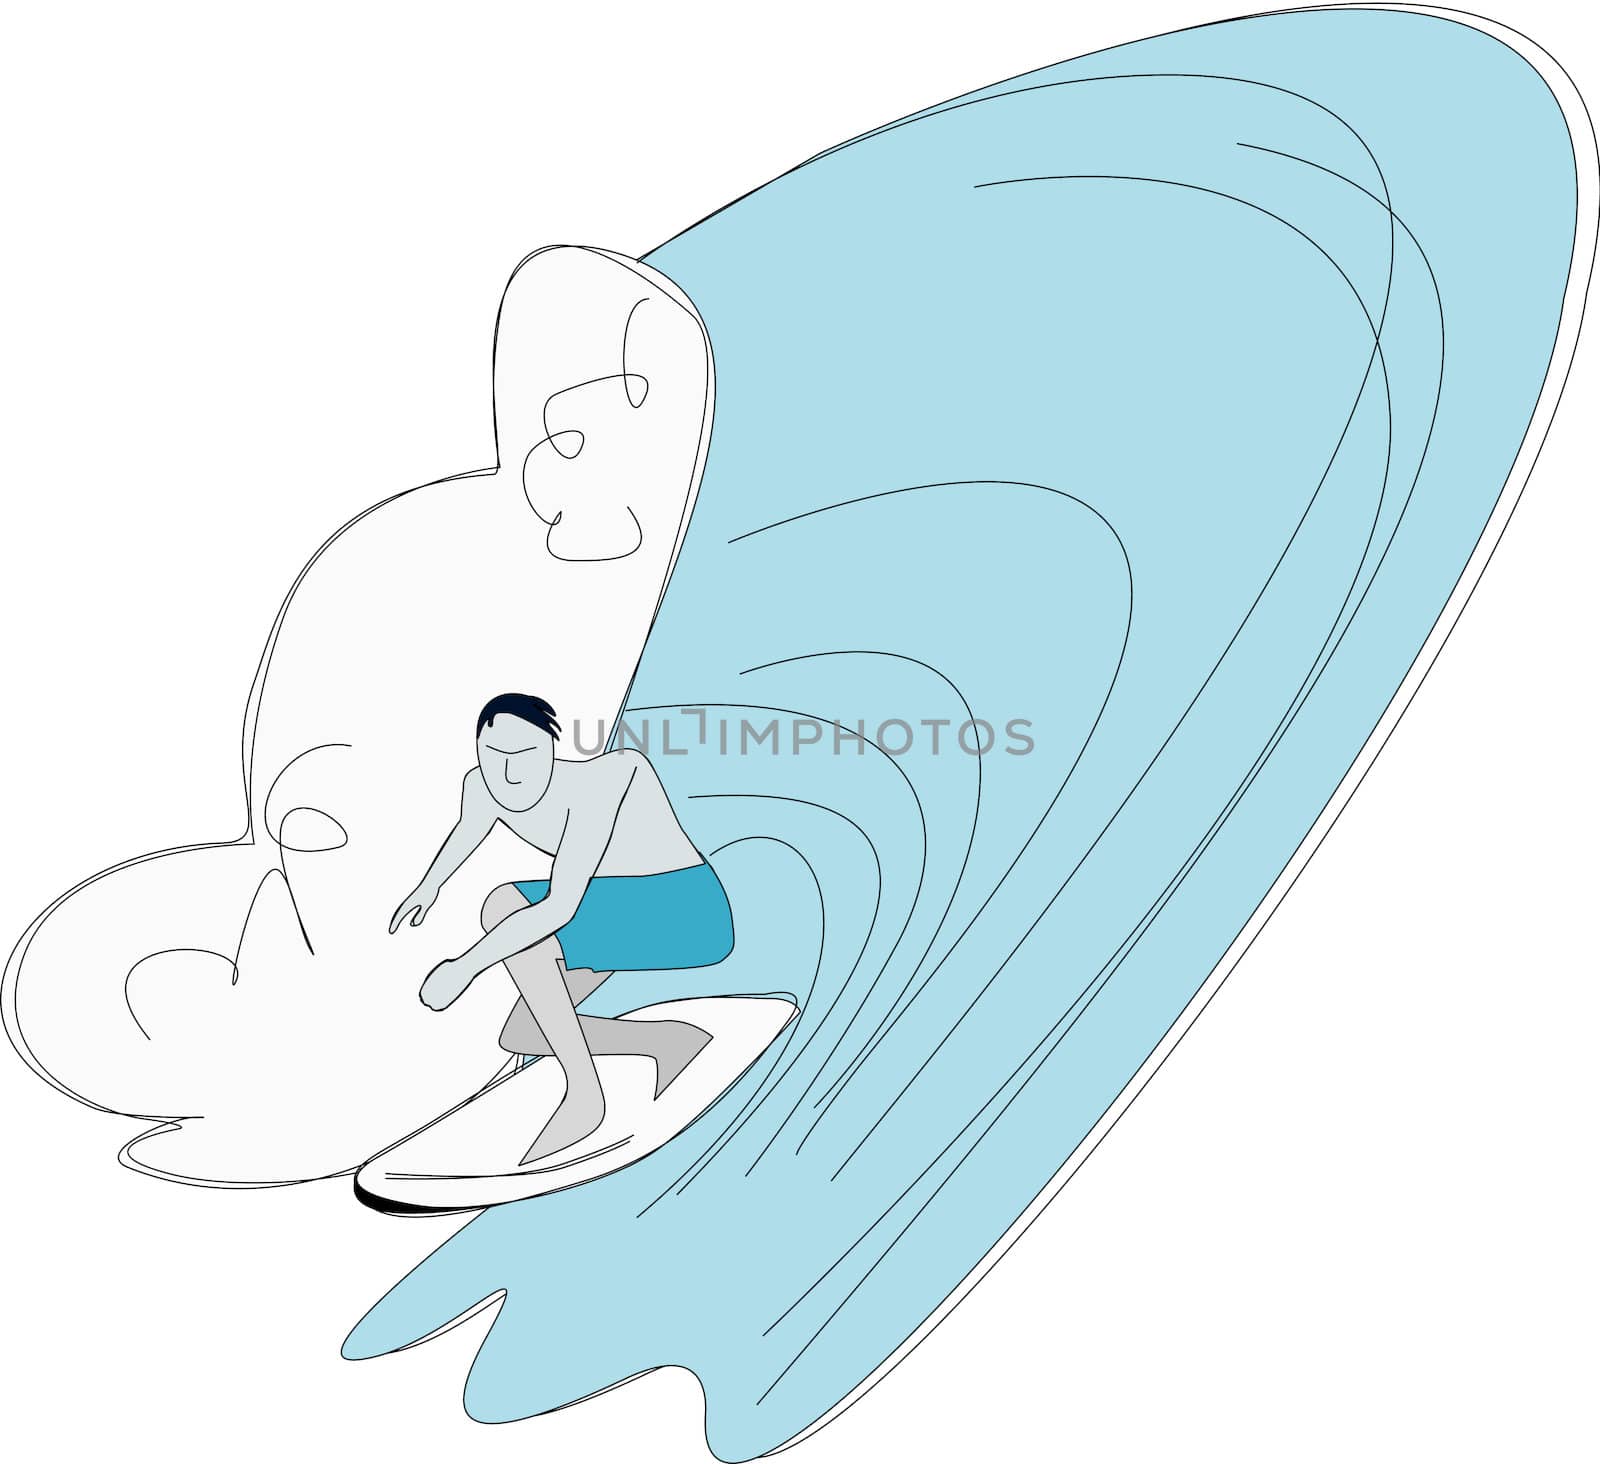 Surf Sketch Concept by trrent